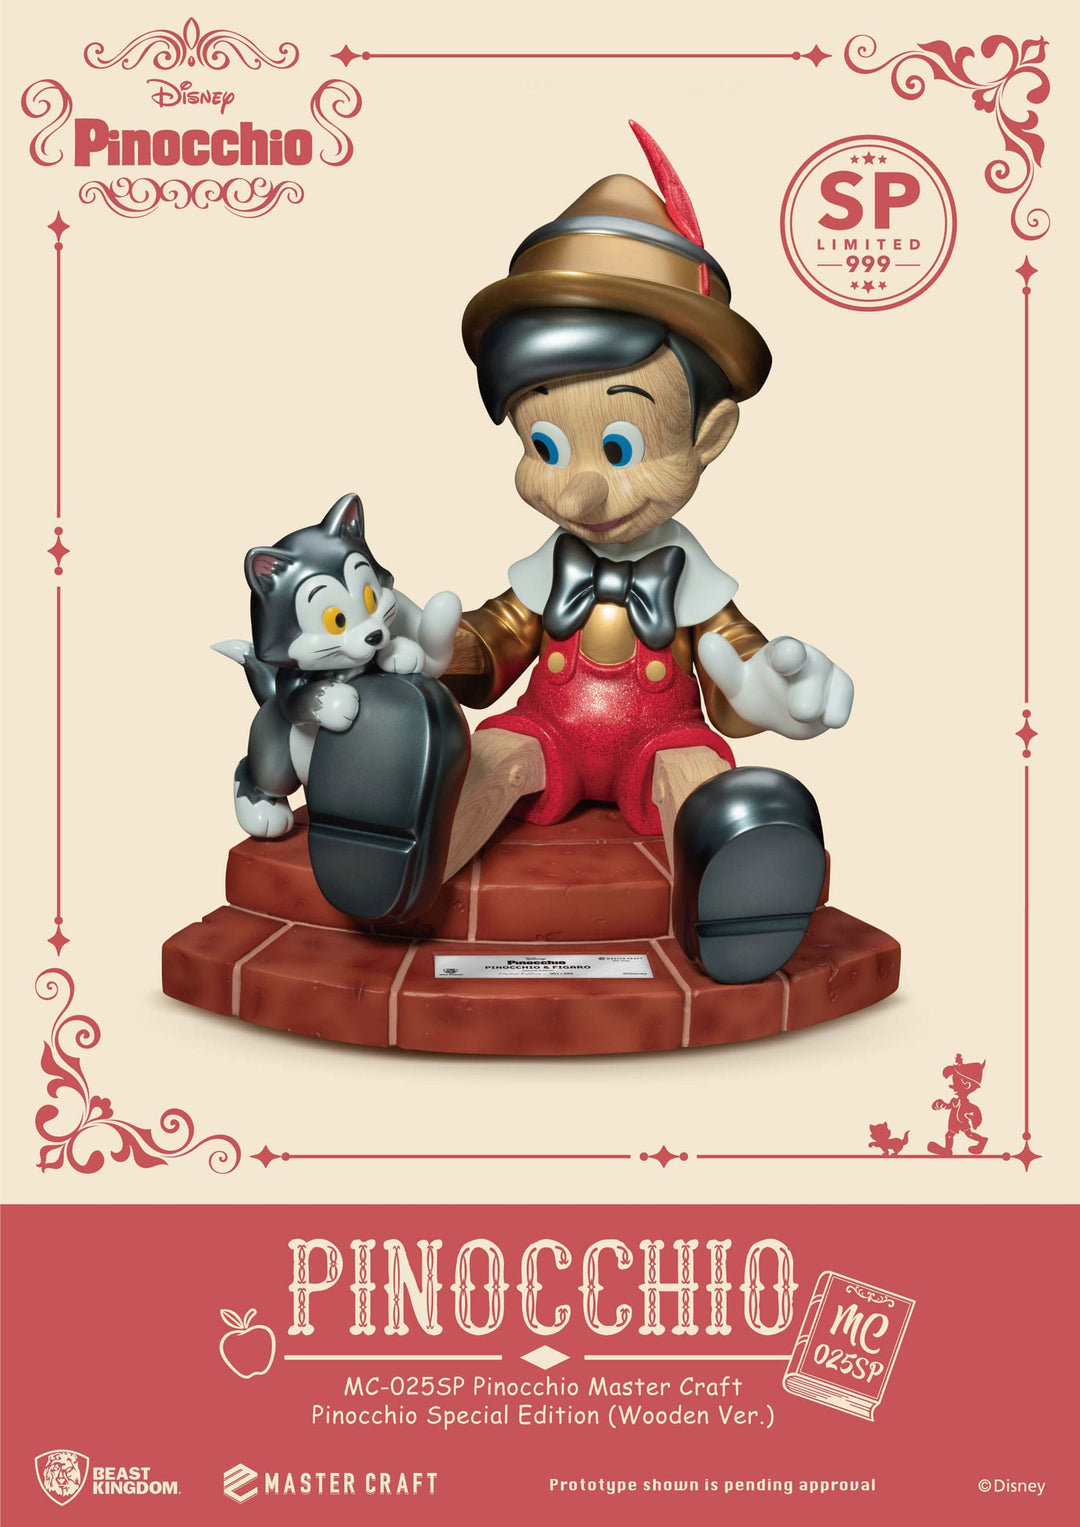 Pinocchio Master Craft Pinocchio (Wooden Version) Limited Edition Statue